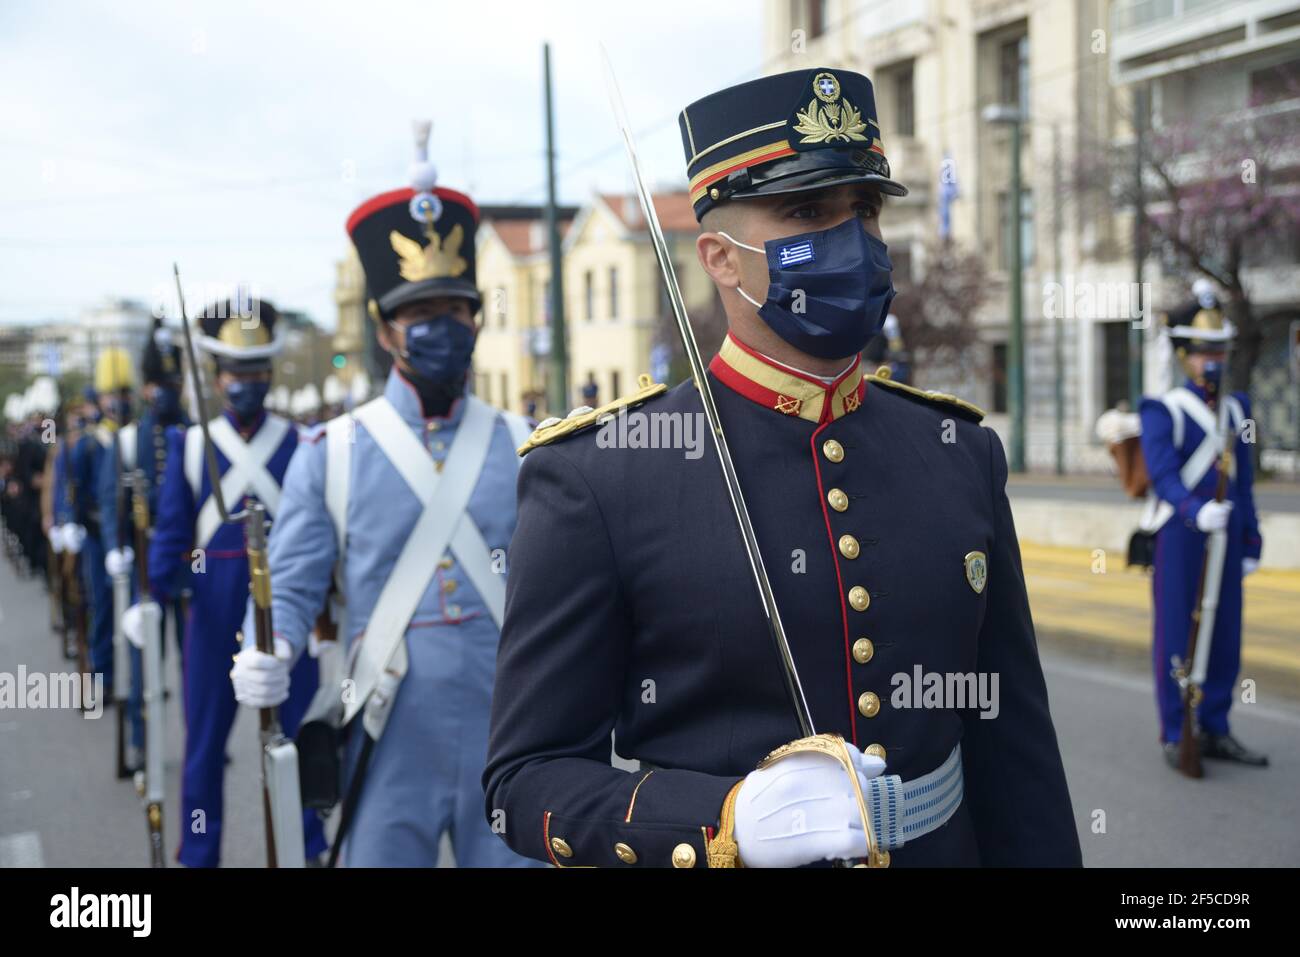 Grèce Bicentenary Independence Day Military Parade à Athènes. Crédit: Dimitris Aspiotis/Alamy Banque D'Images